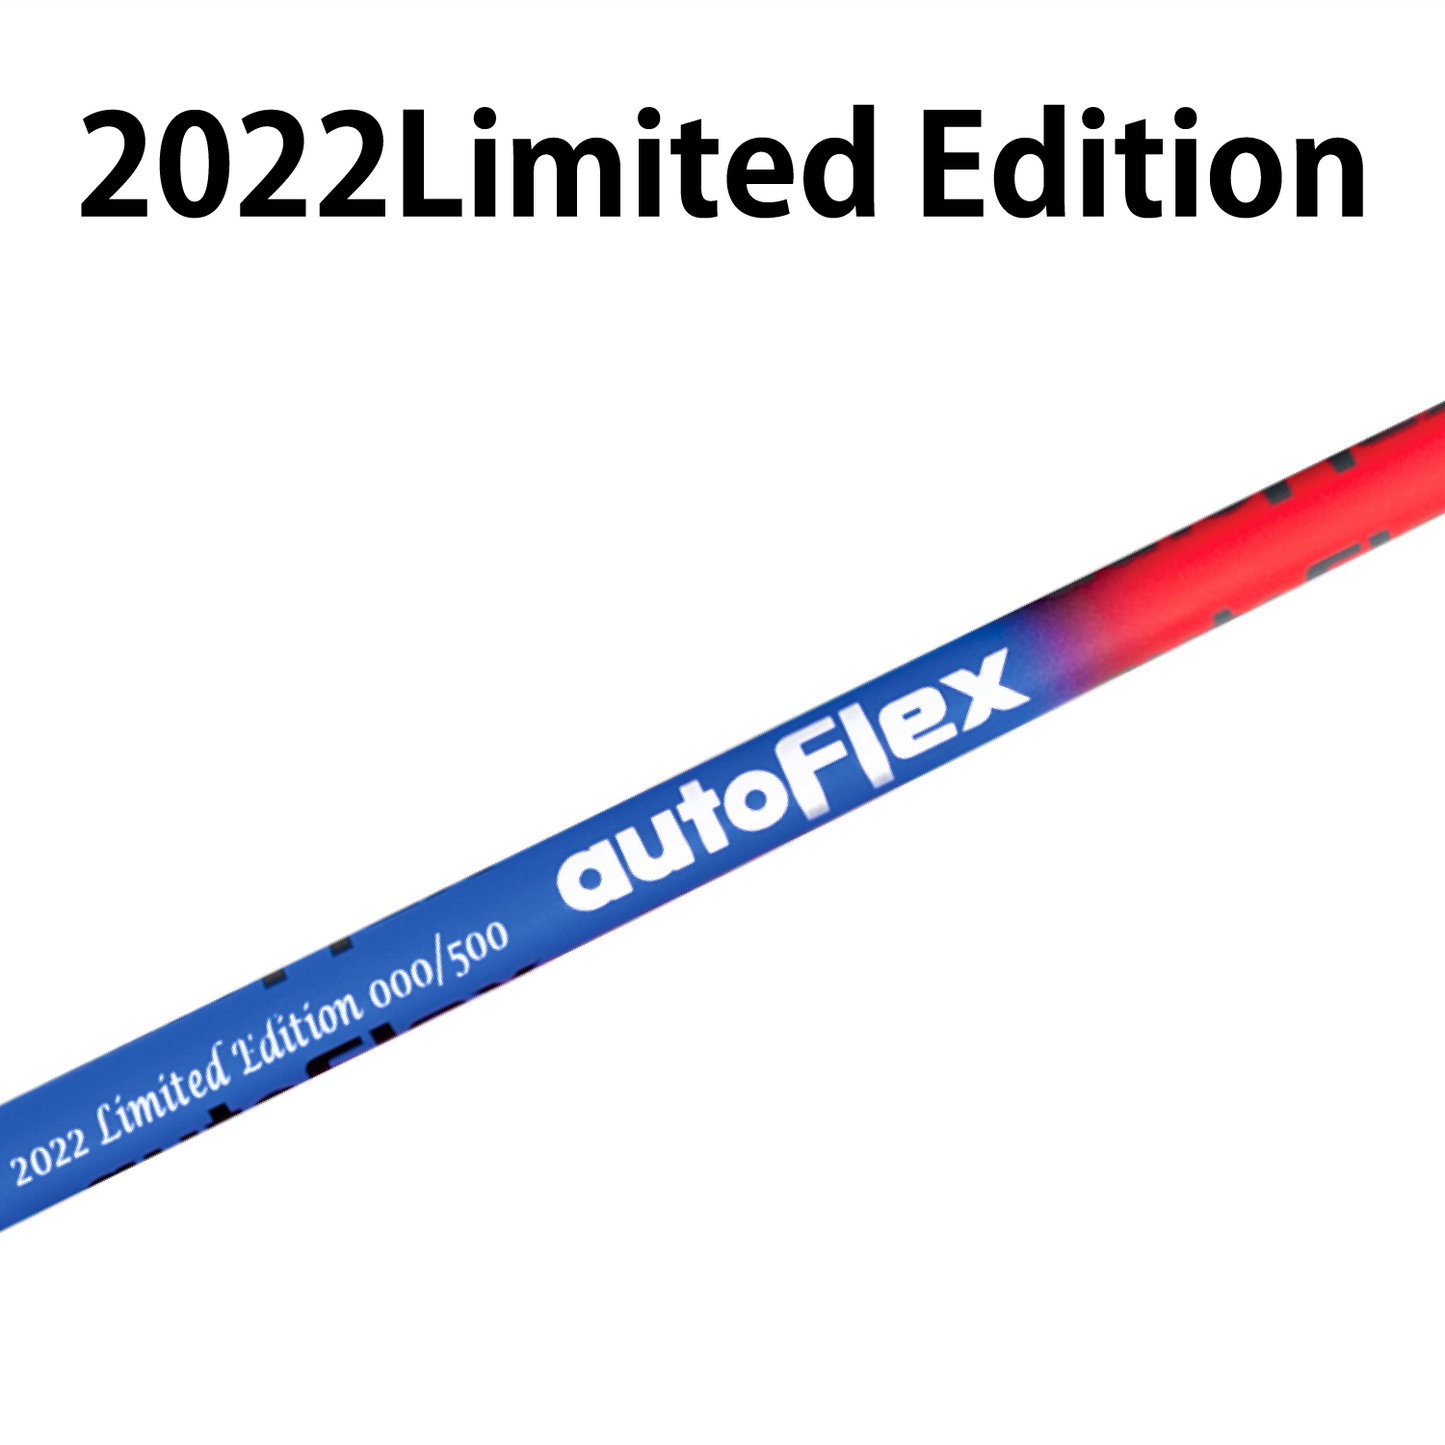 AutoFlex Shaft Limited Edition タイトリストスリーブ付き